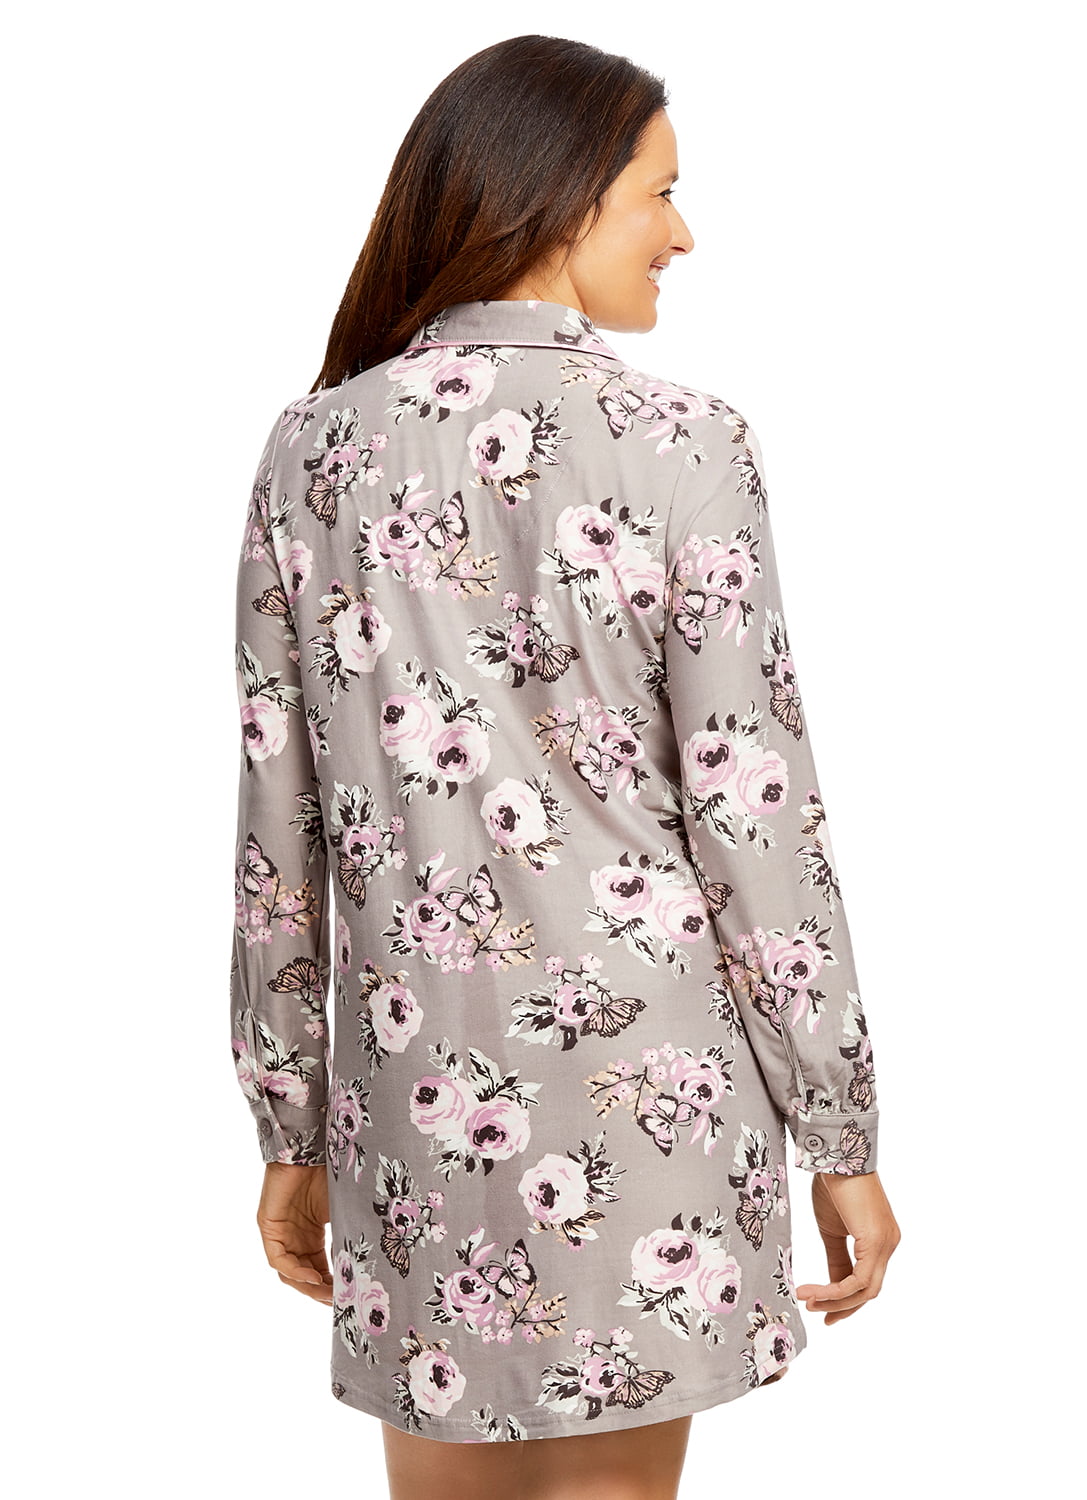 Gloria Vanderbilt Womens Button-Down Sleep Shirt Stylish Pajama Top